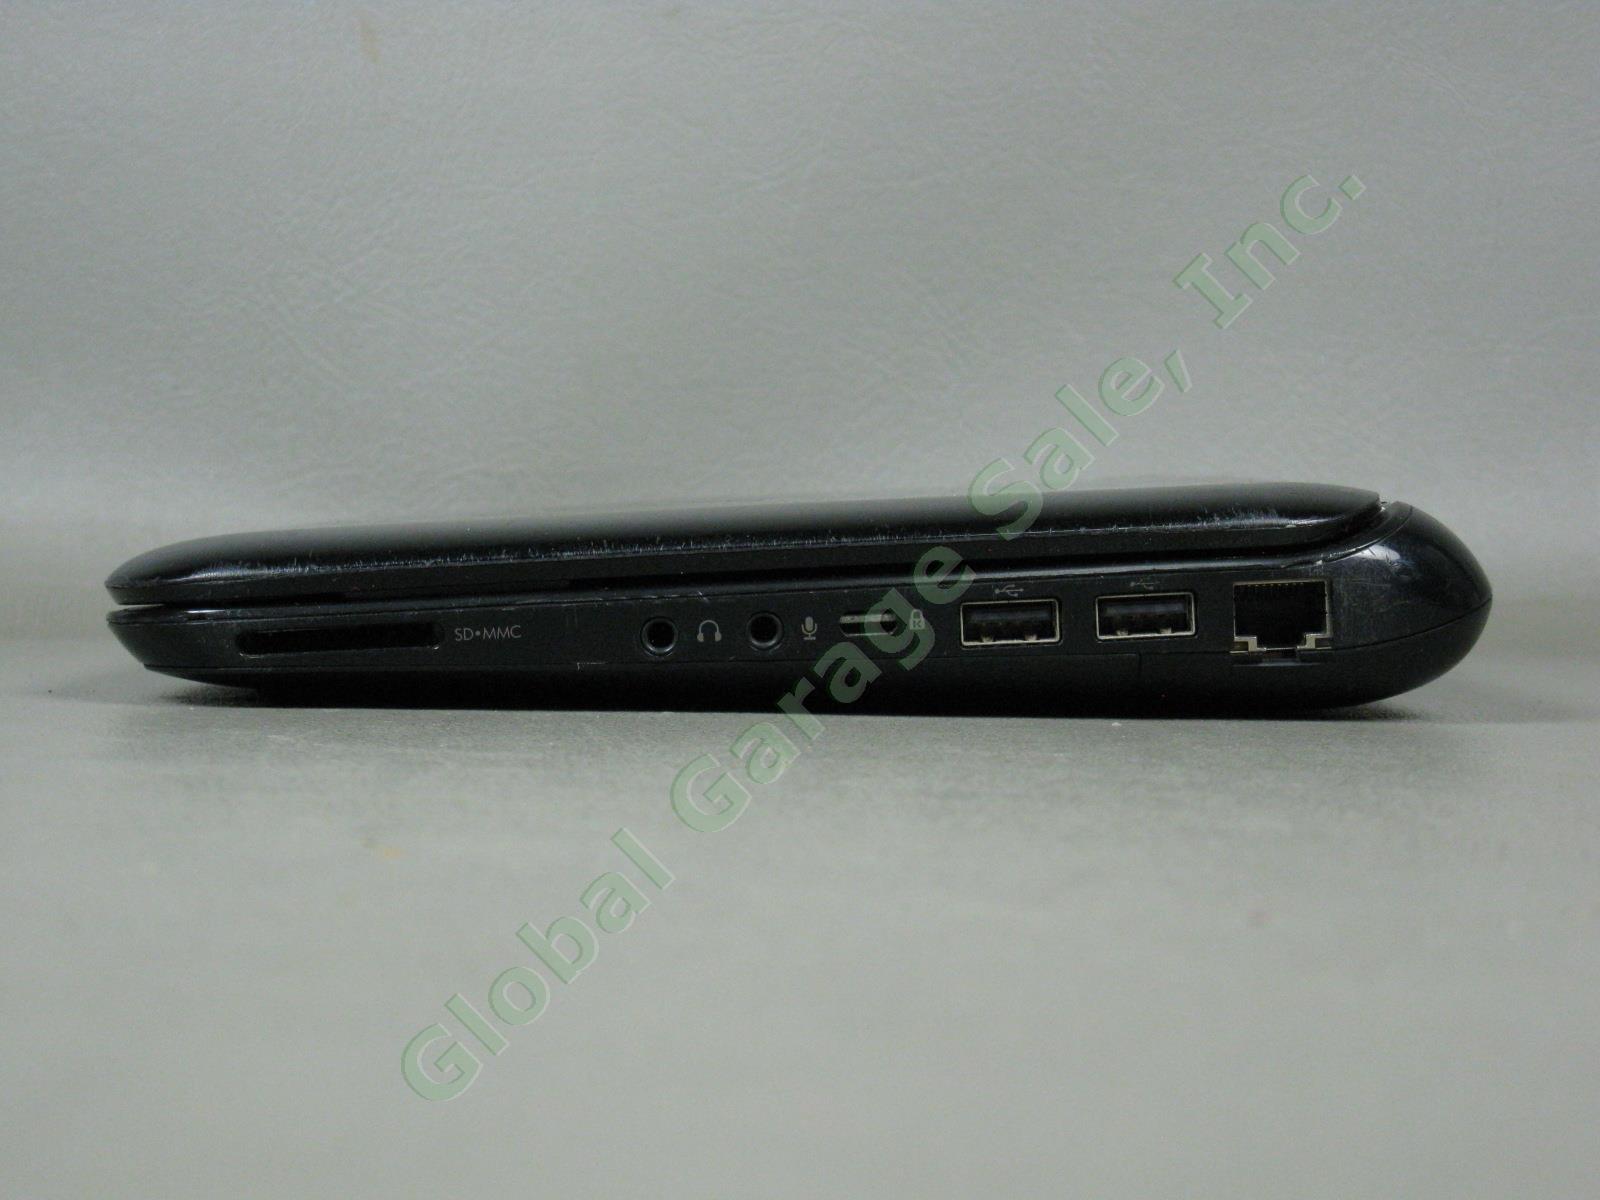 HP Mini 1104 10.1" Netbook Laptop Intel Atom N2600 1.6GHz 2GB RAM 320GB HDD Win7 5